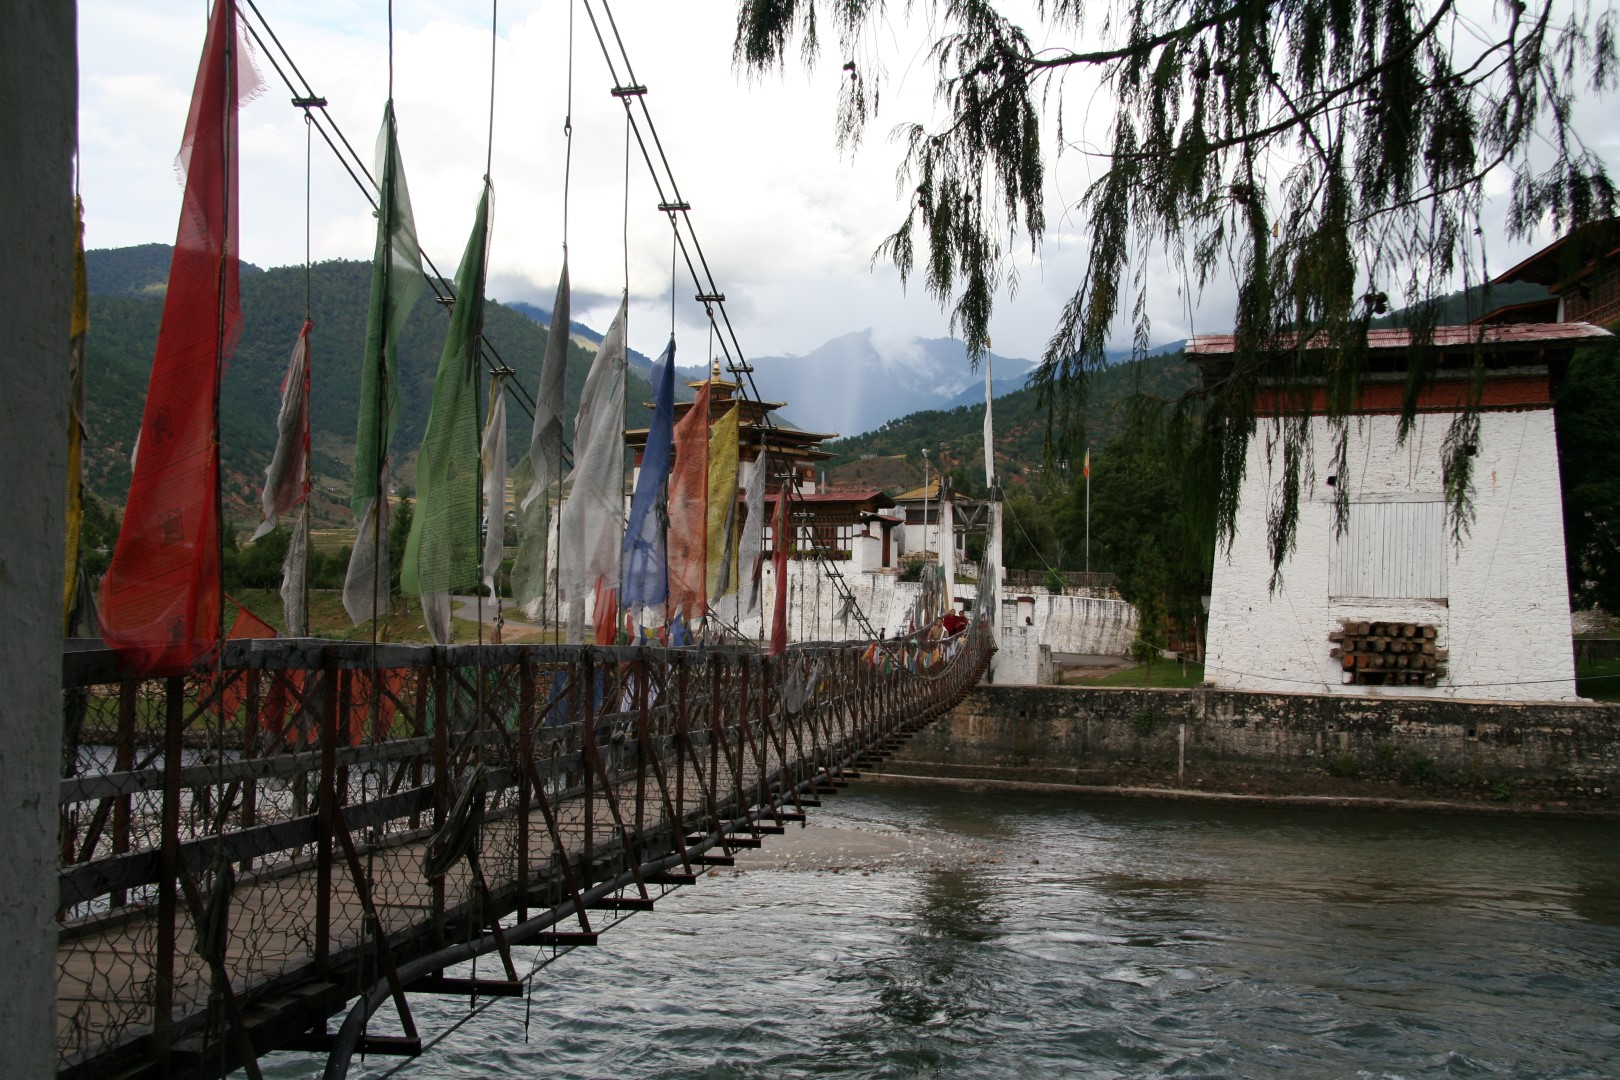 wp-content/uploads/itineraries/Bhutan/bhutan (18).jpg